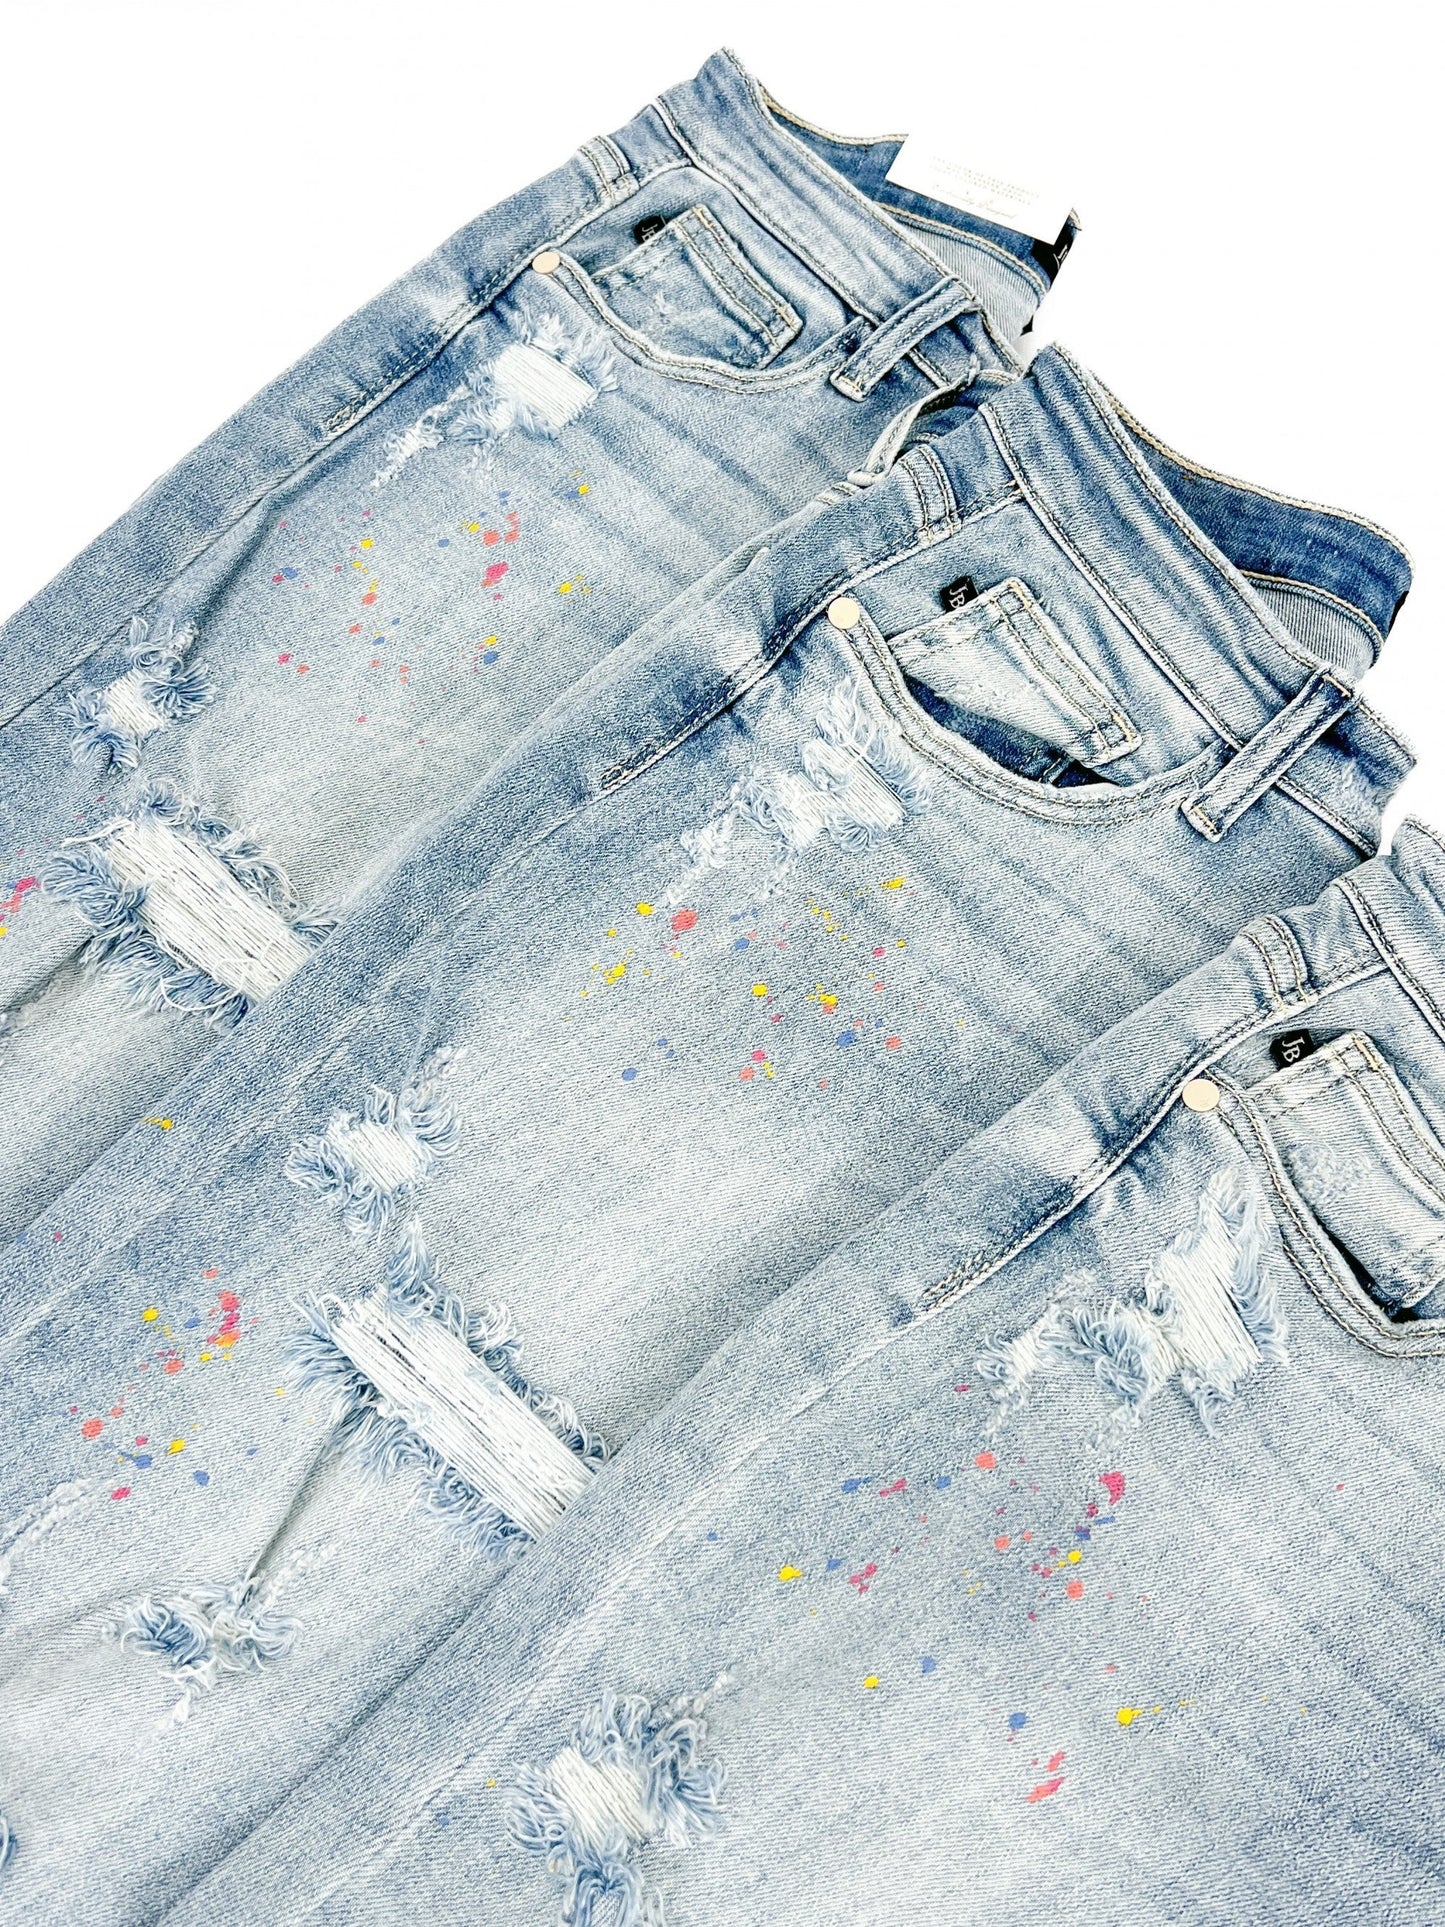 Judy Blue High Rise Distressed Paint Splatter Jeans